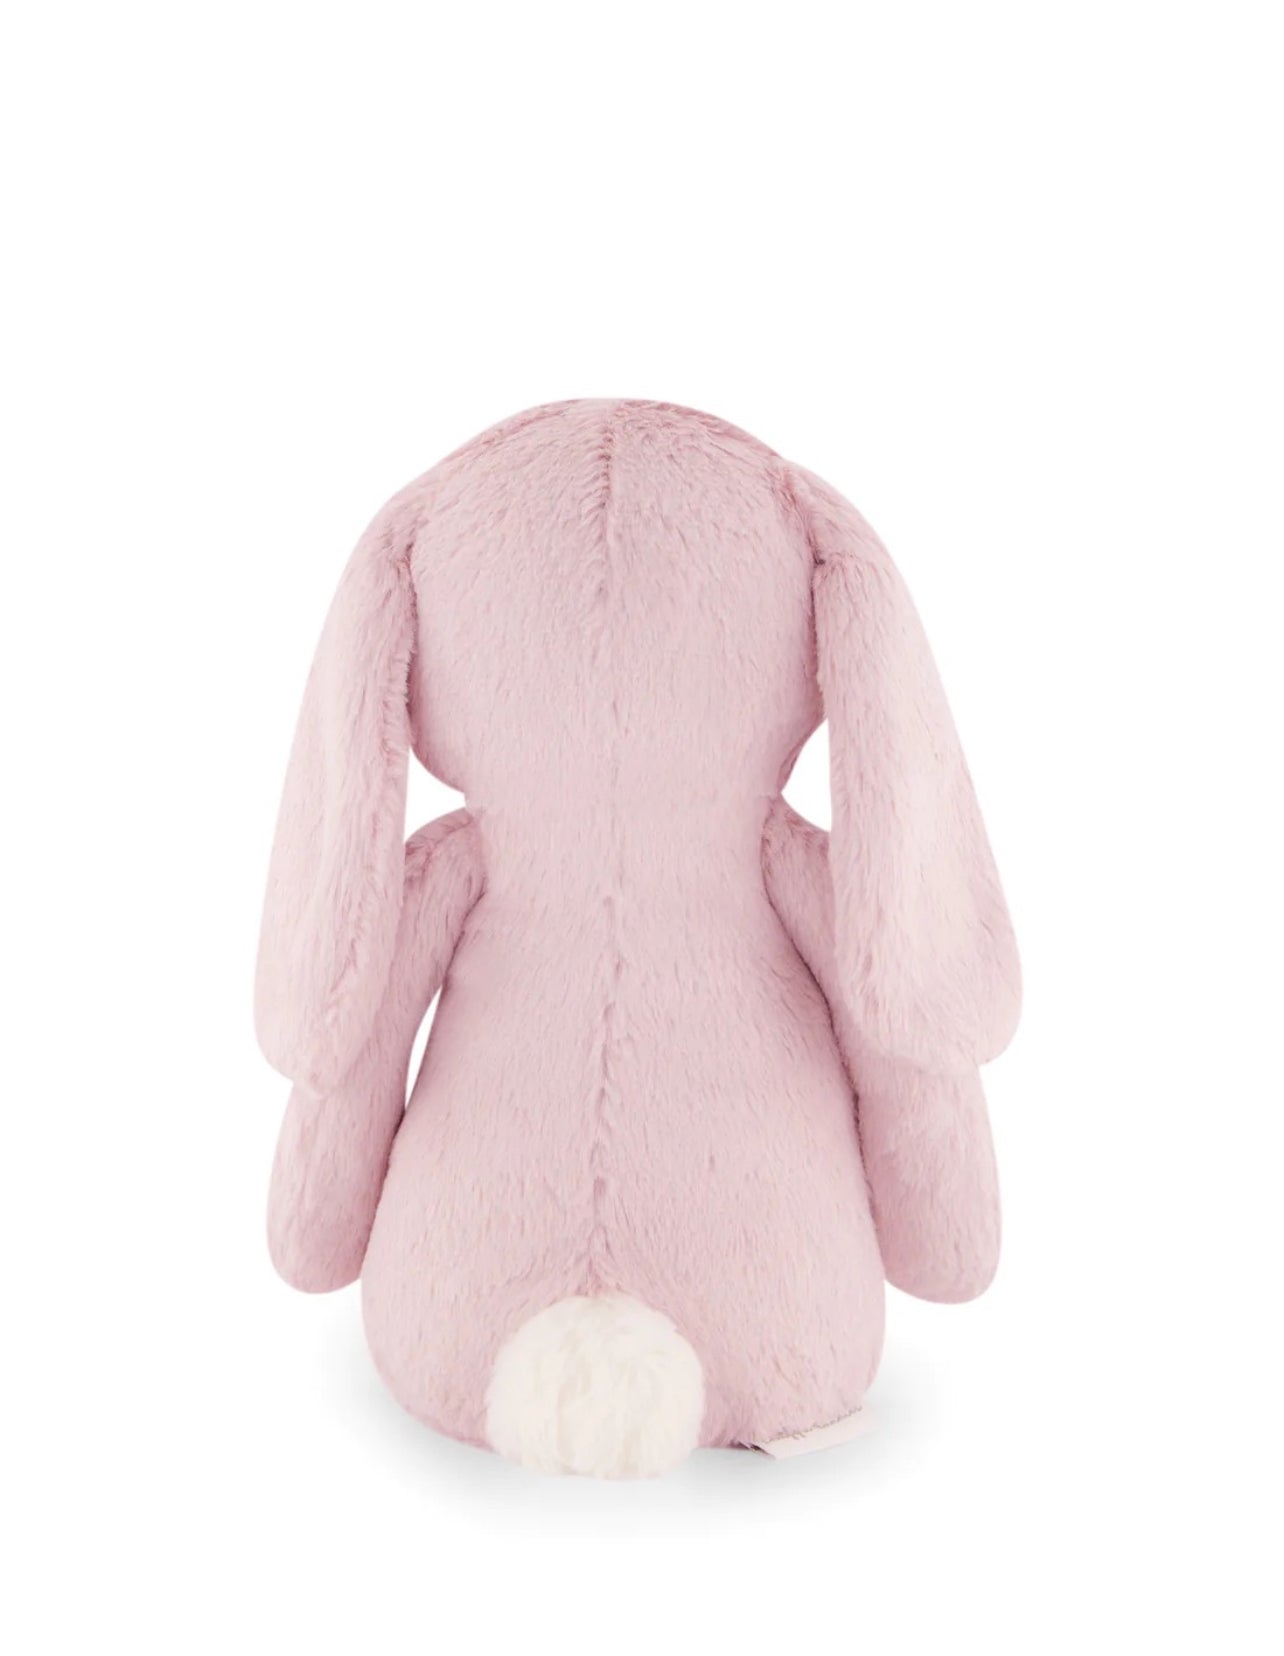 Penelope The Bunny - Powder Pink 30cm